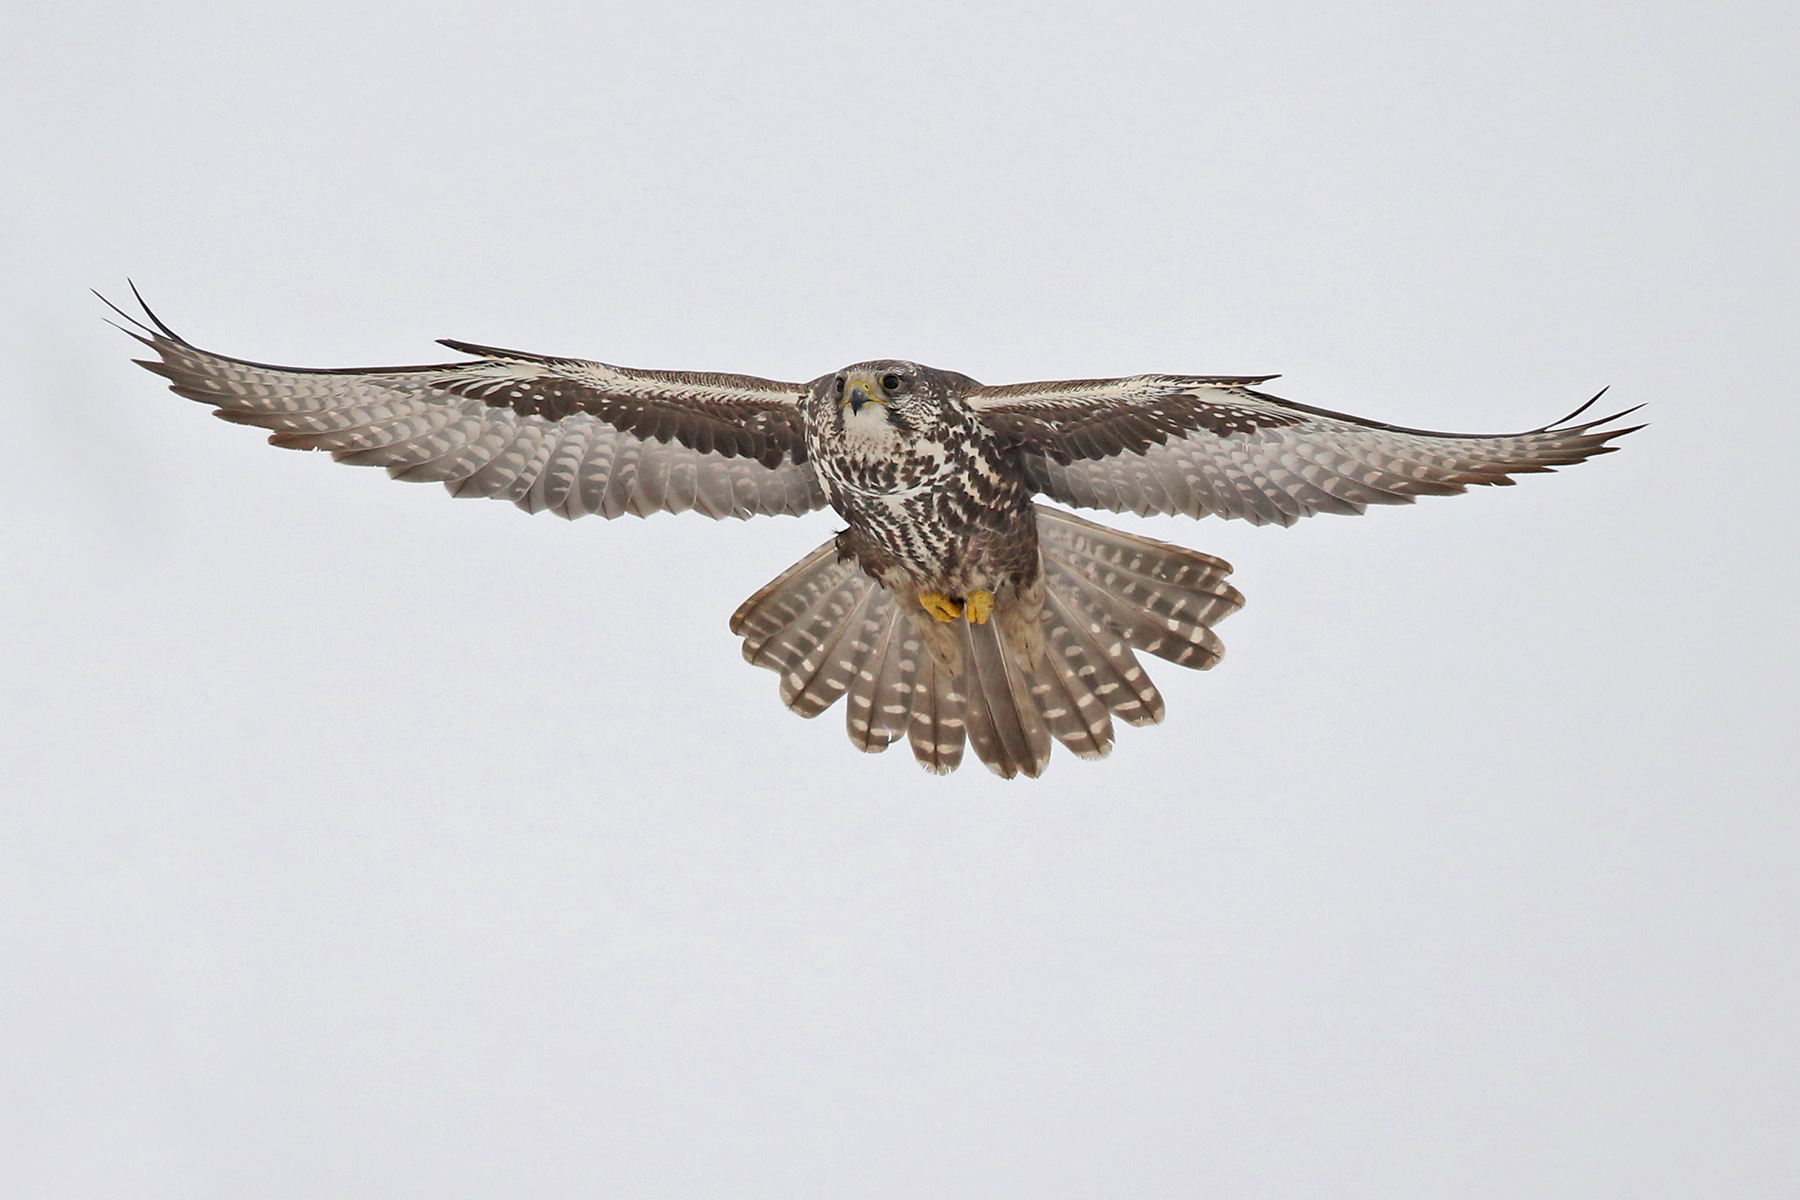 Saker Falcon in Hungary (image by János Oláh)